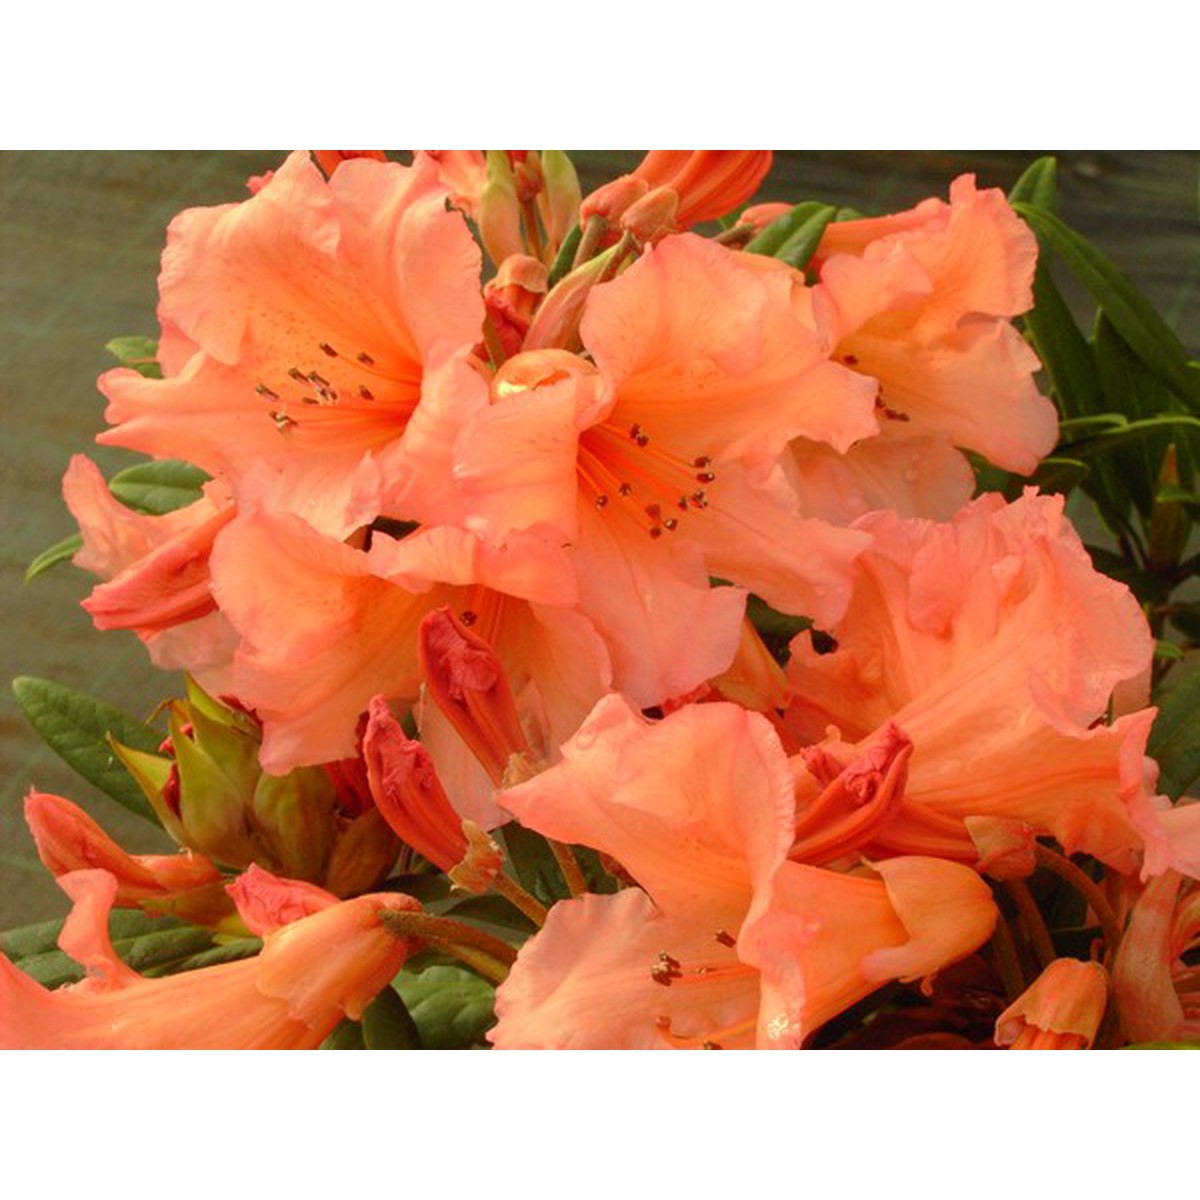   Rhododendron 'Tortoiseshell orange'  C15 70/+